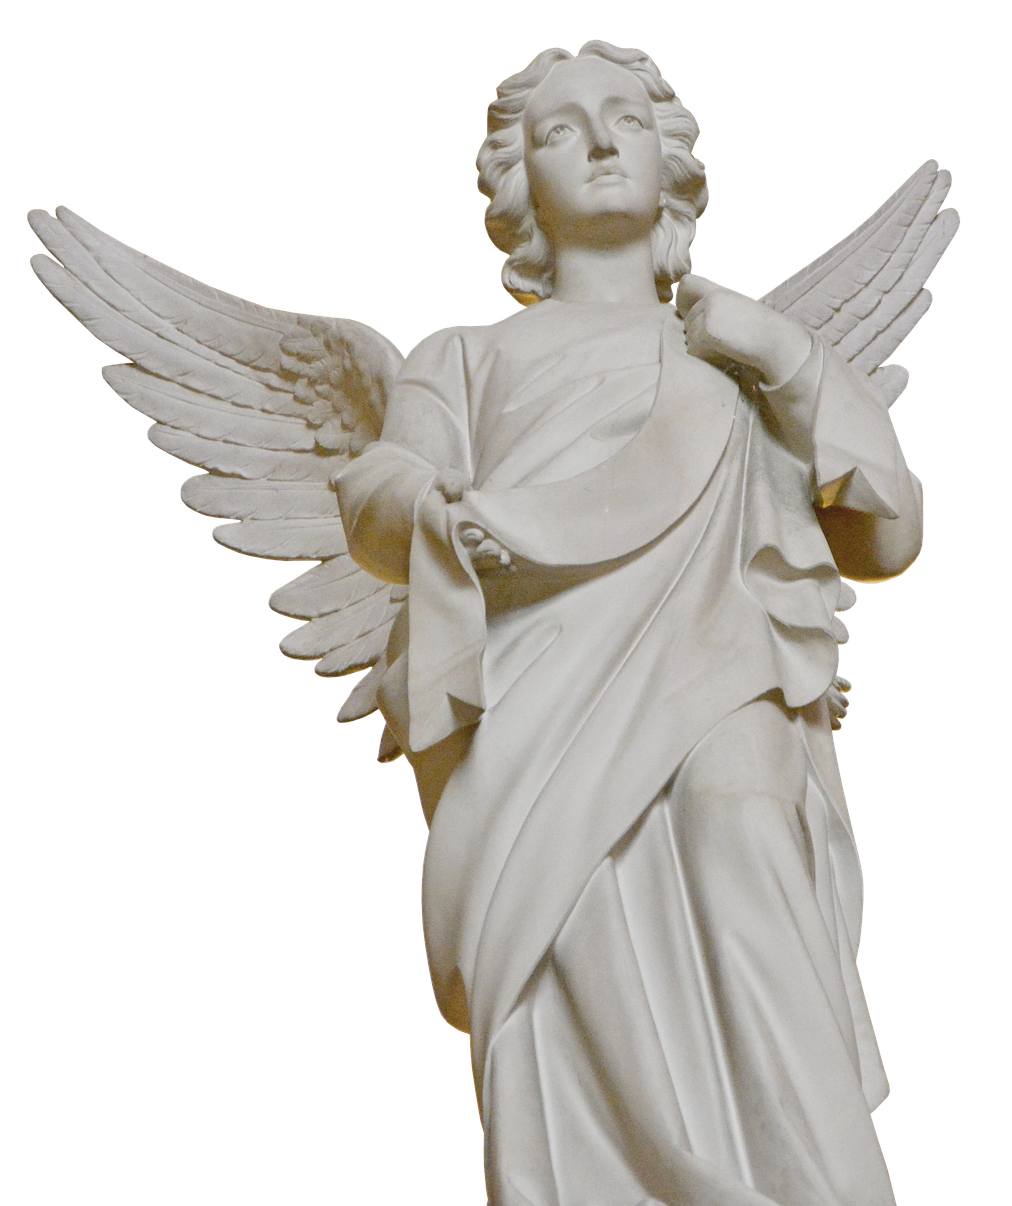 Holy Spirit from Pixabay